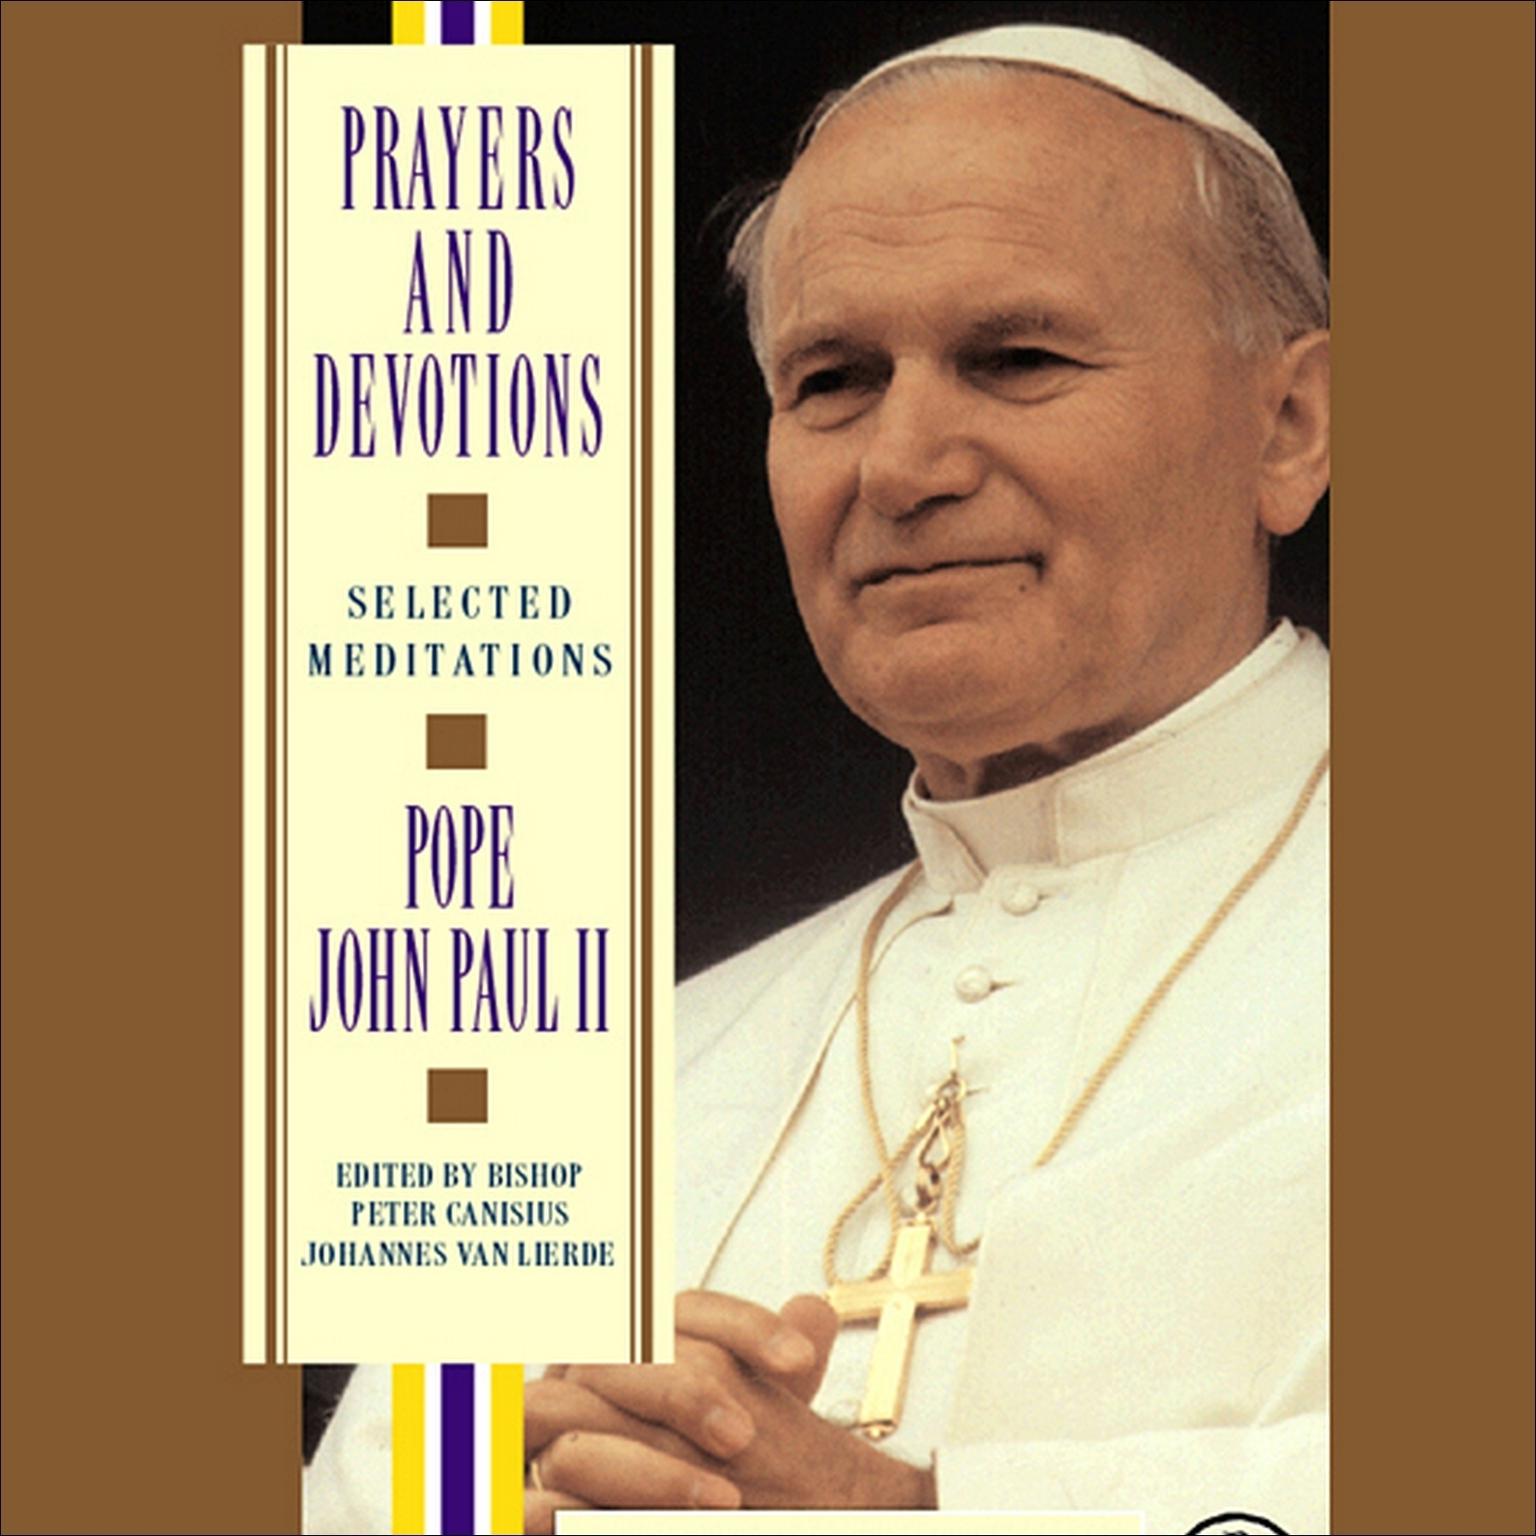 Prayers and Devotions from Pope John Paul Ii (Abridged) Audiobook, by Pope John Paul II